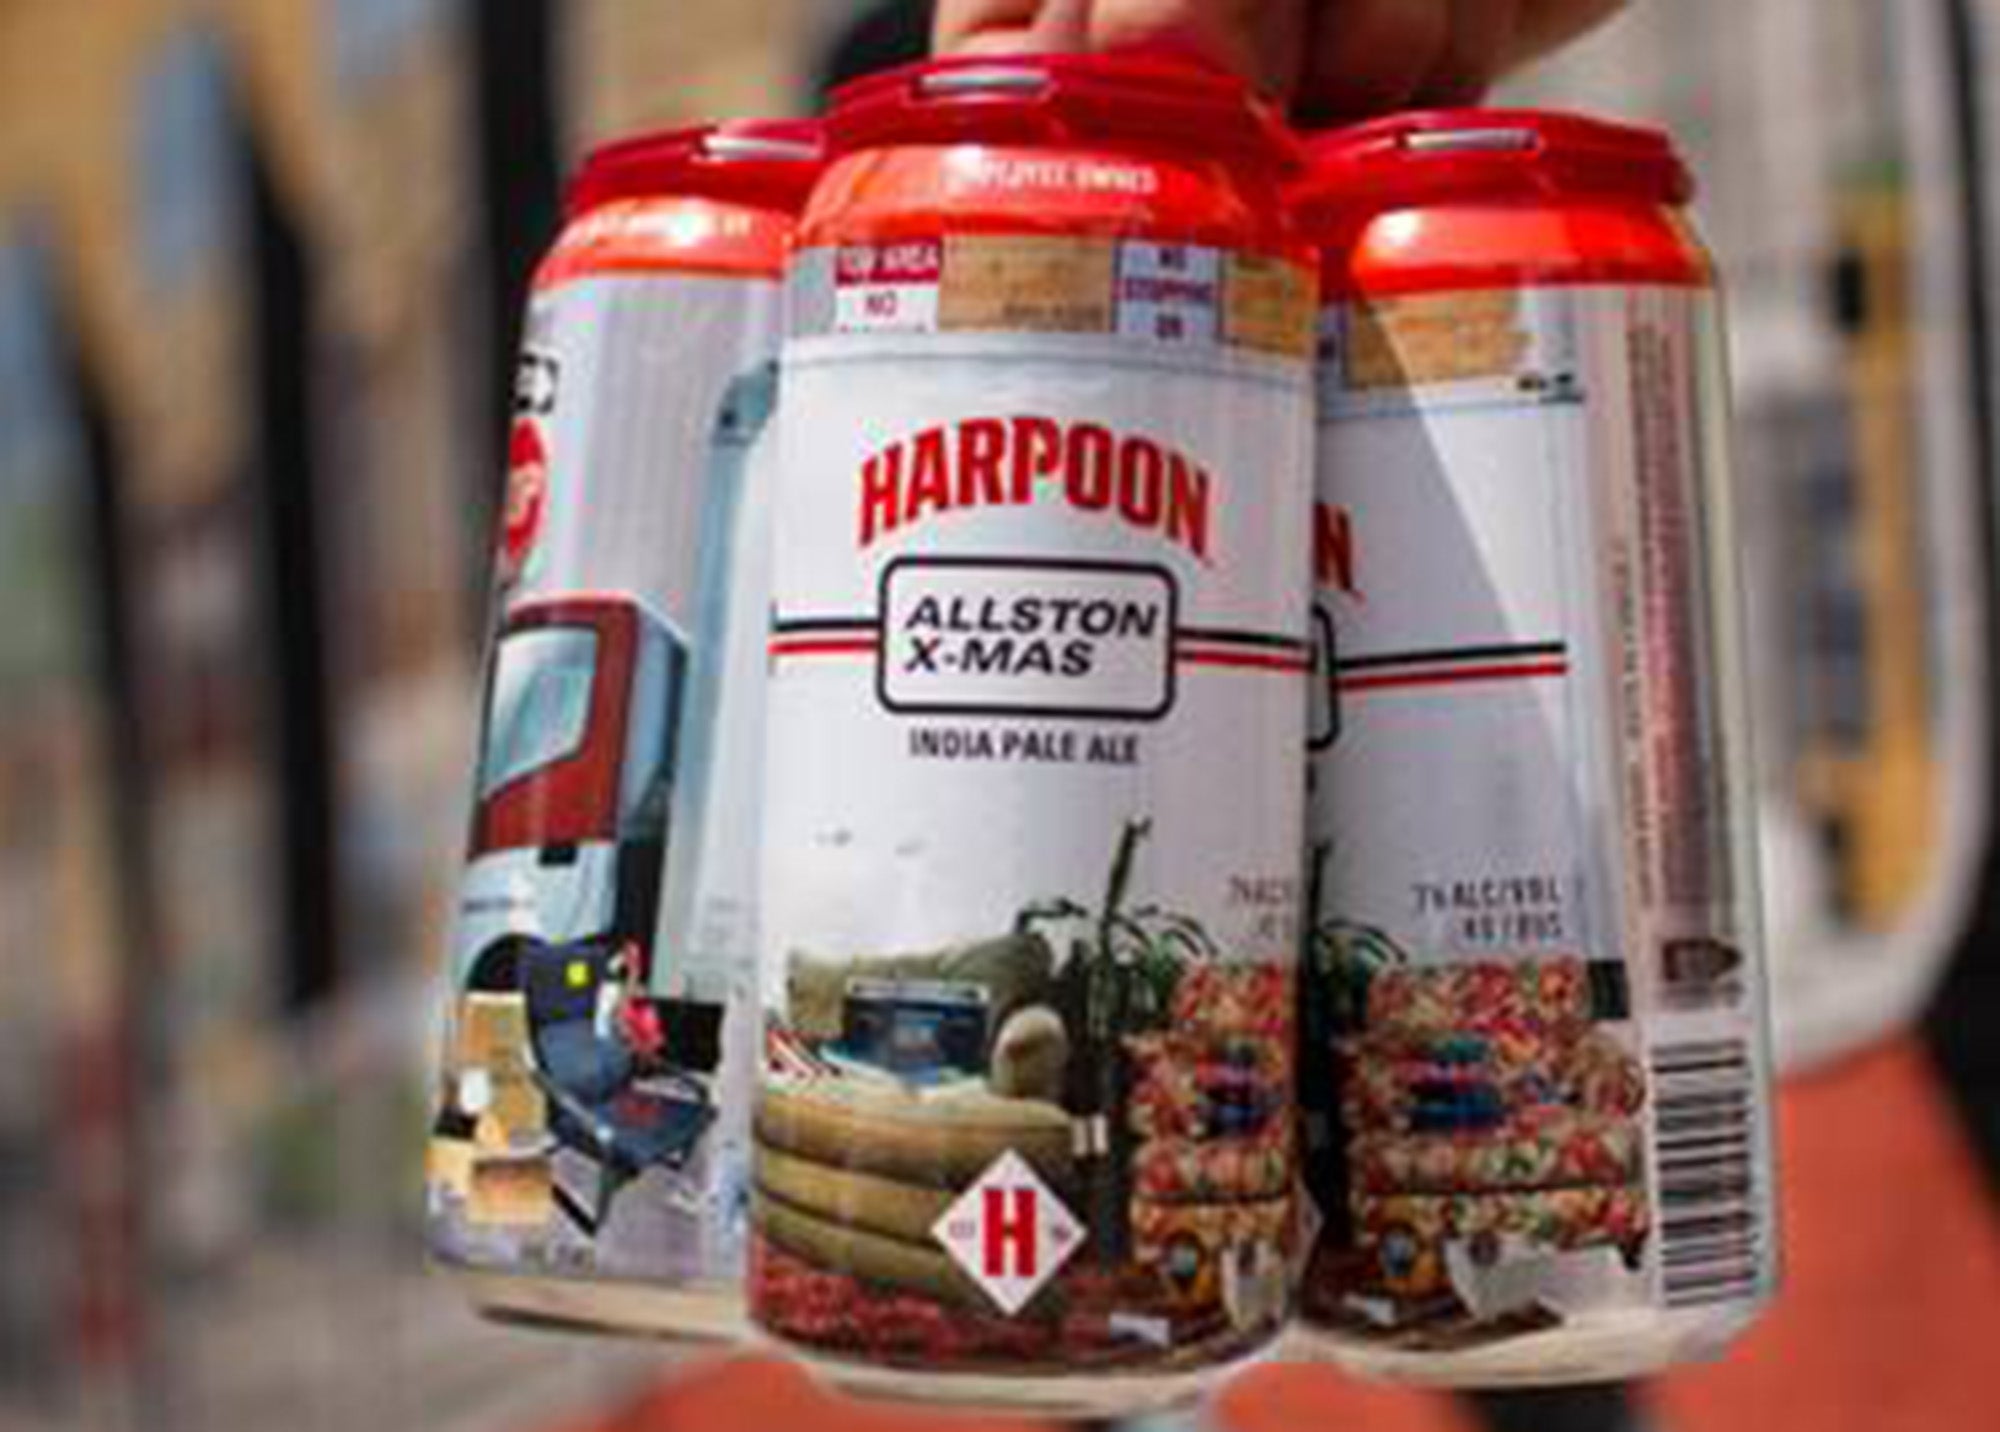 Harpoon Brewery's Allston X-Mas